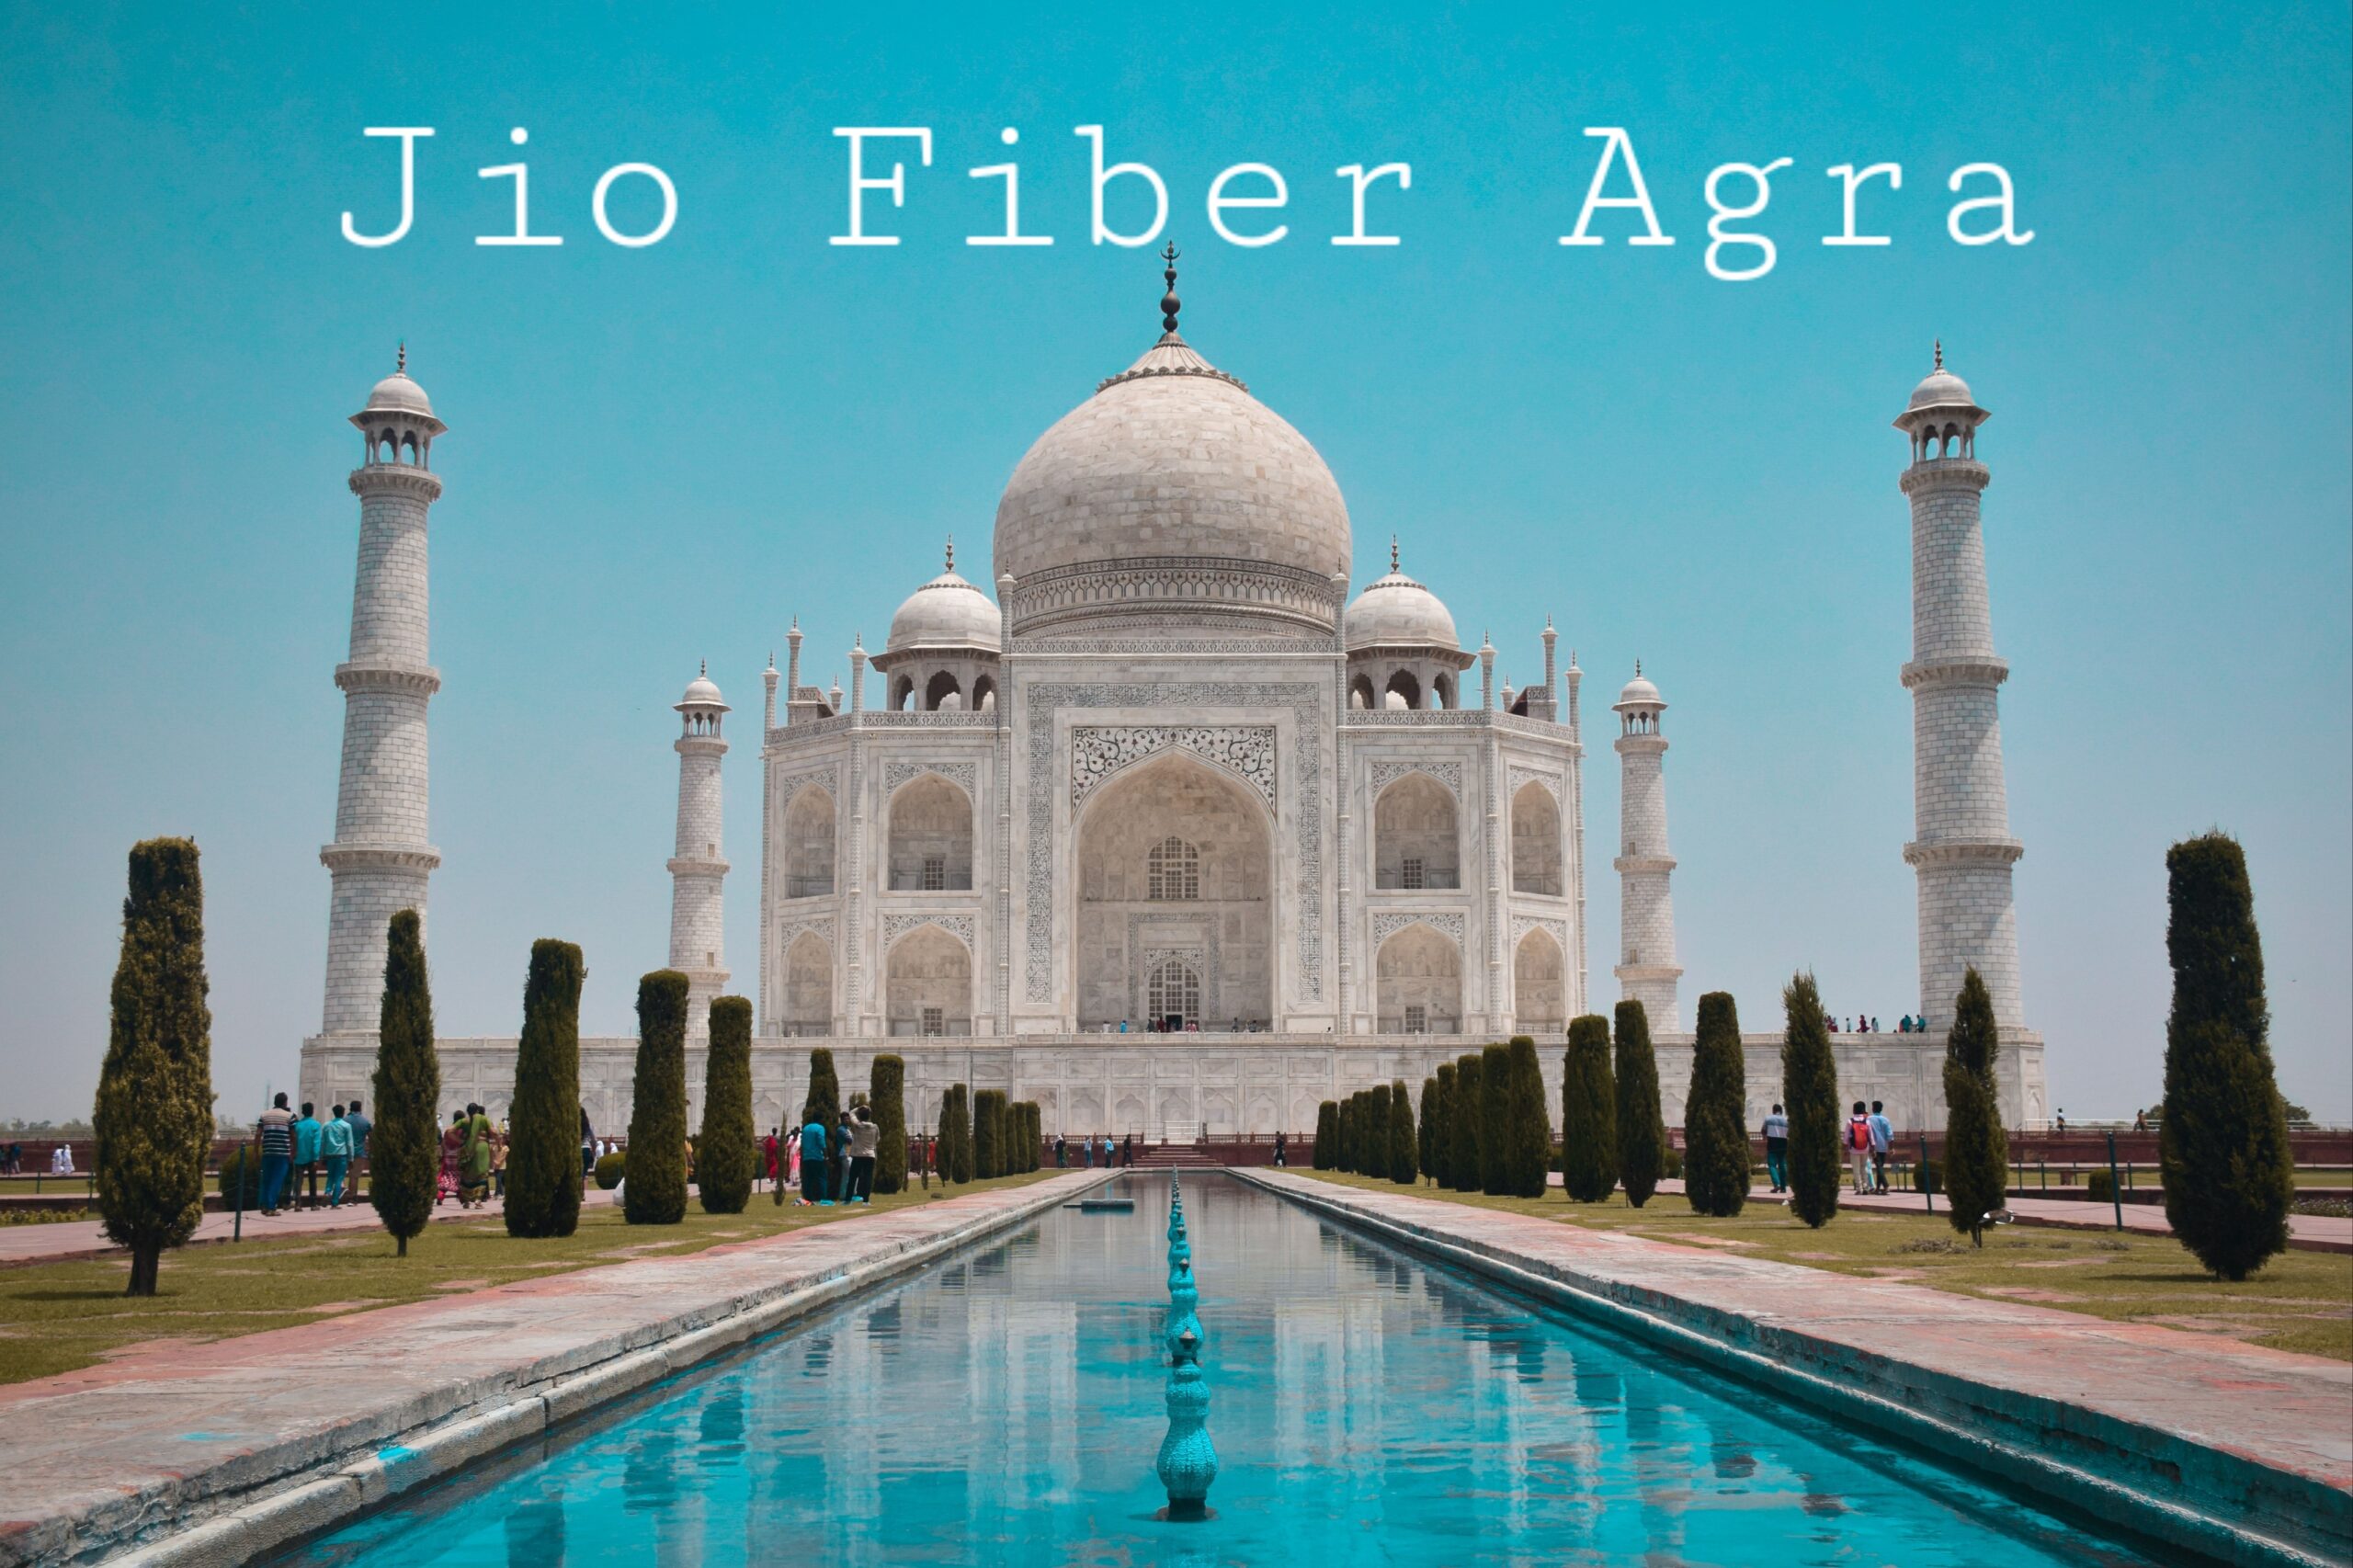 Jio fiber Agra